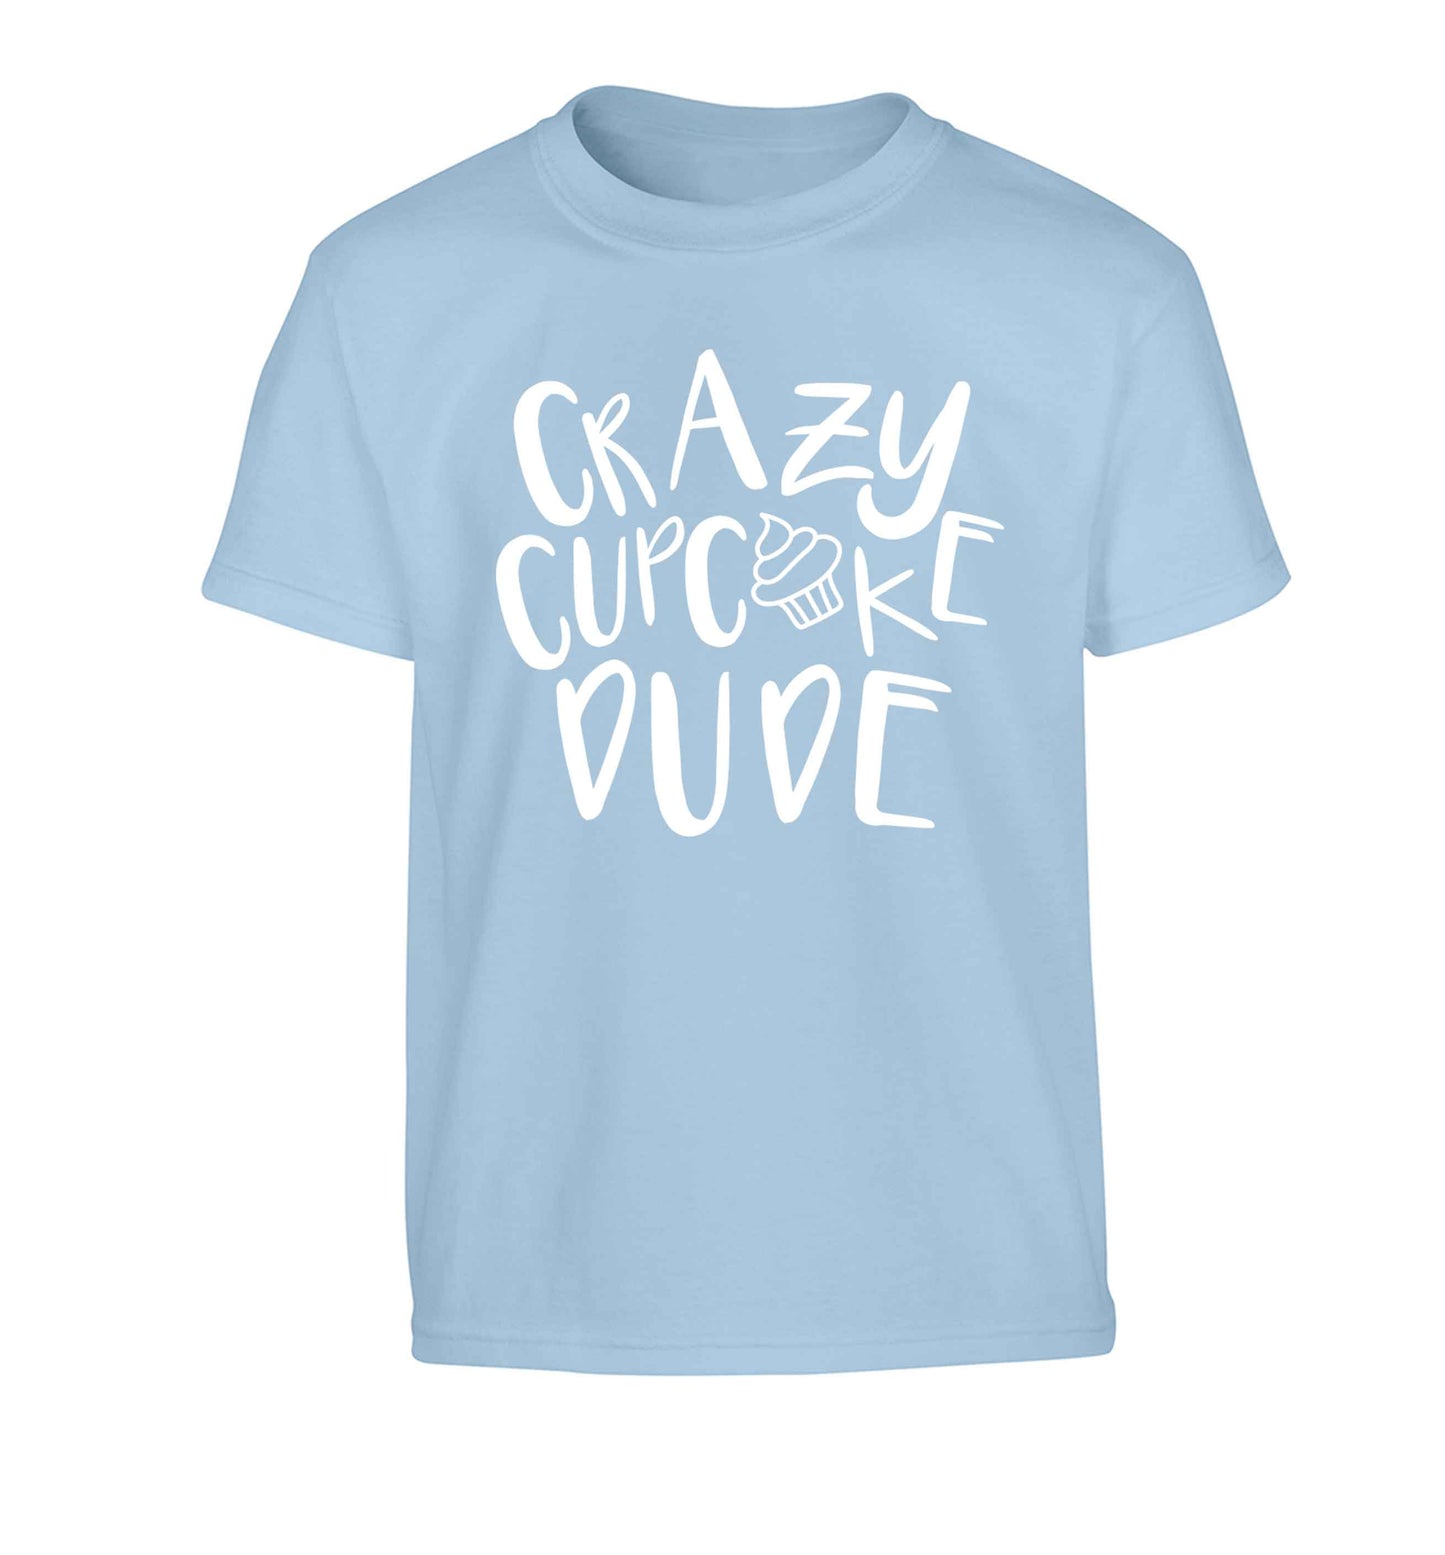 Crazy cupcake dude Children's light blue Tshirt 12-13 Years